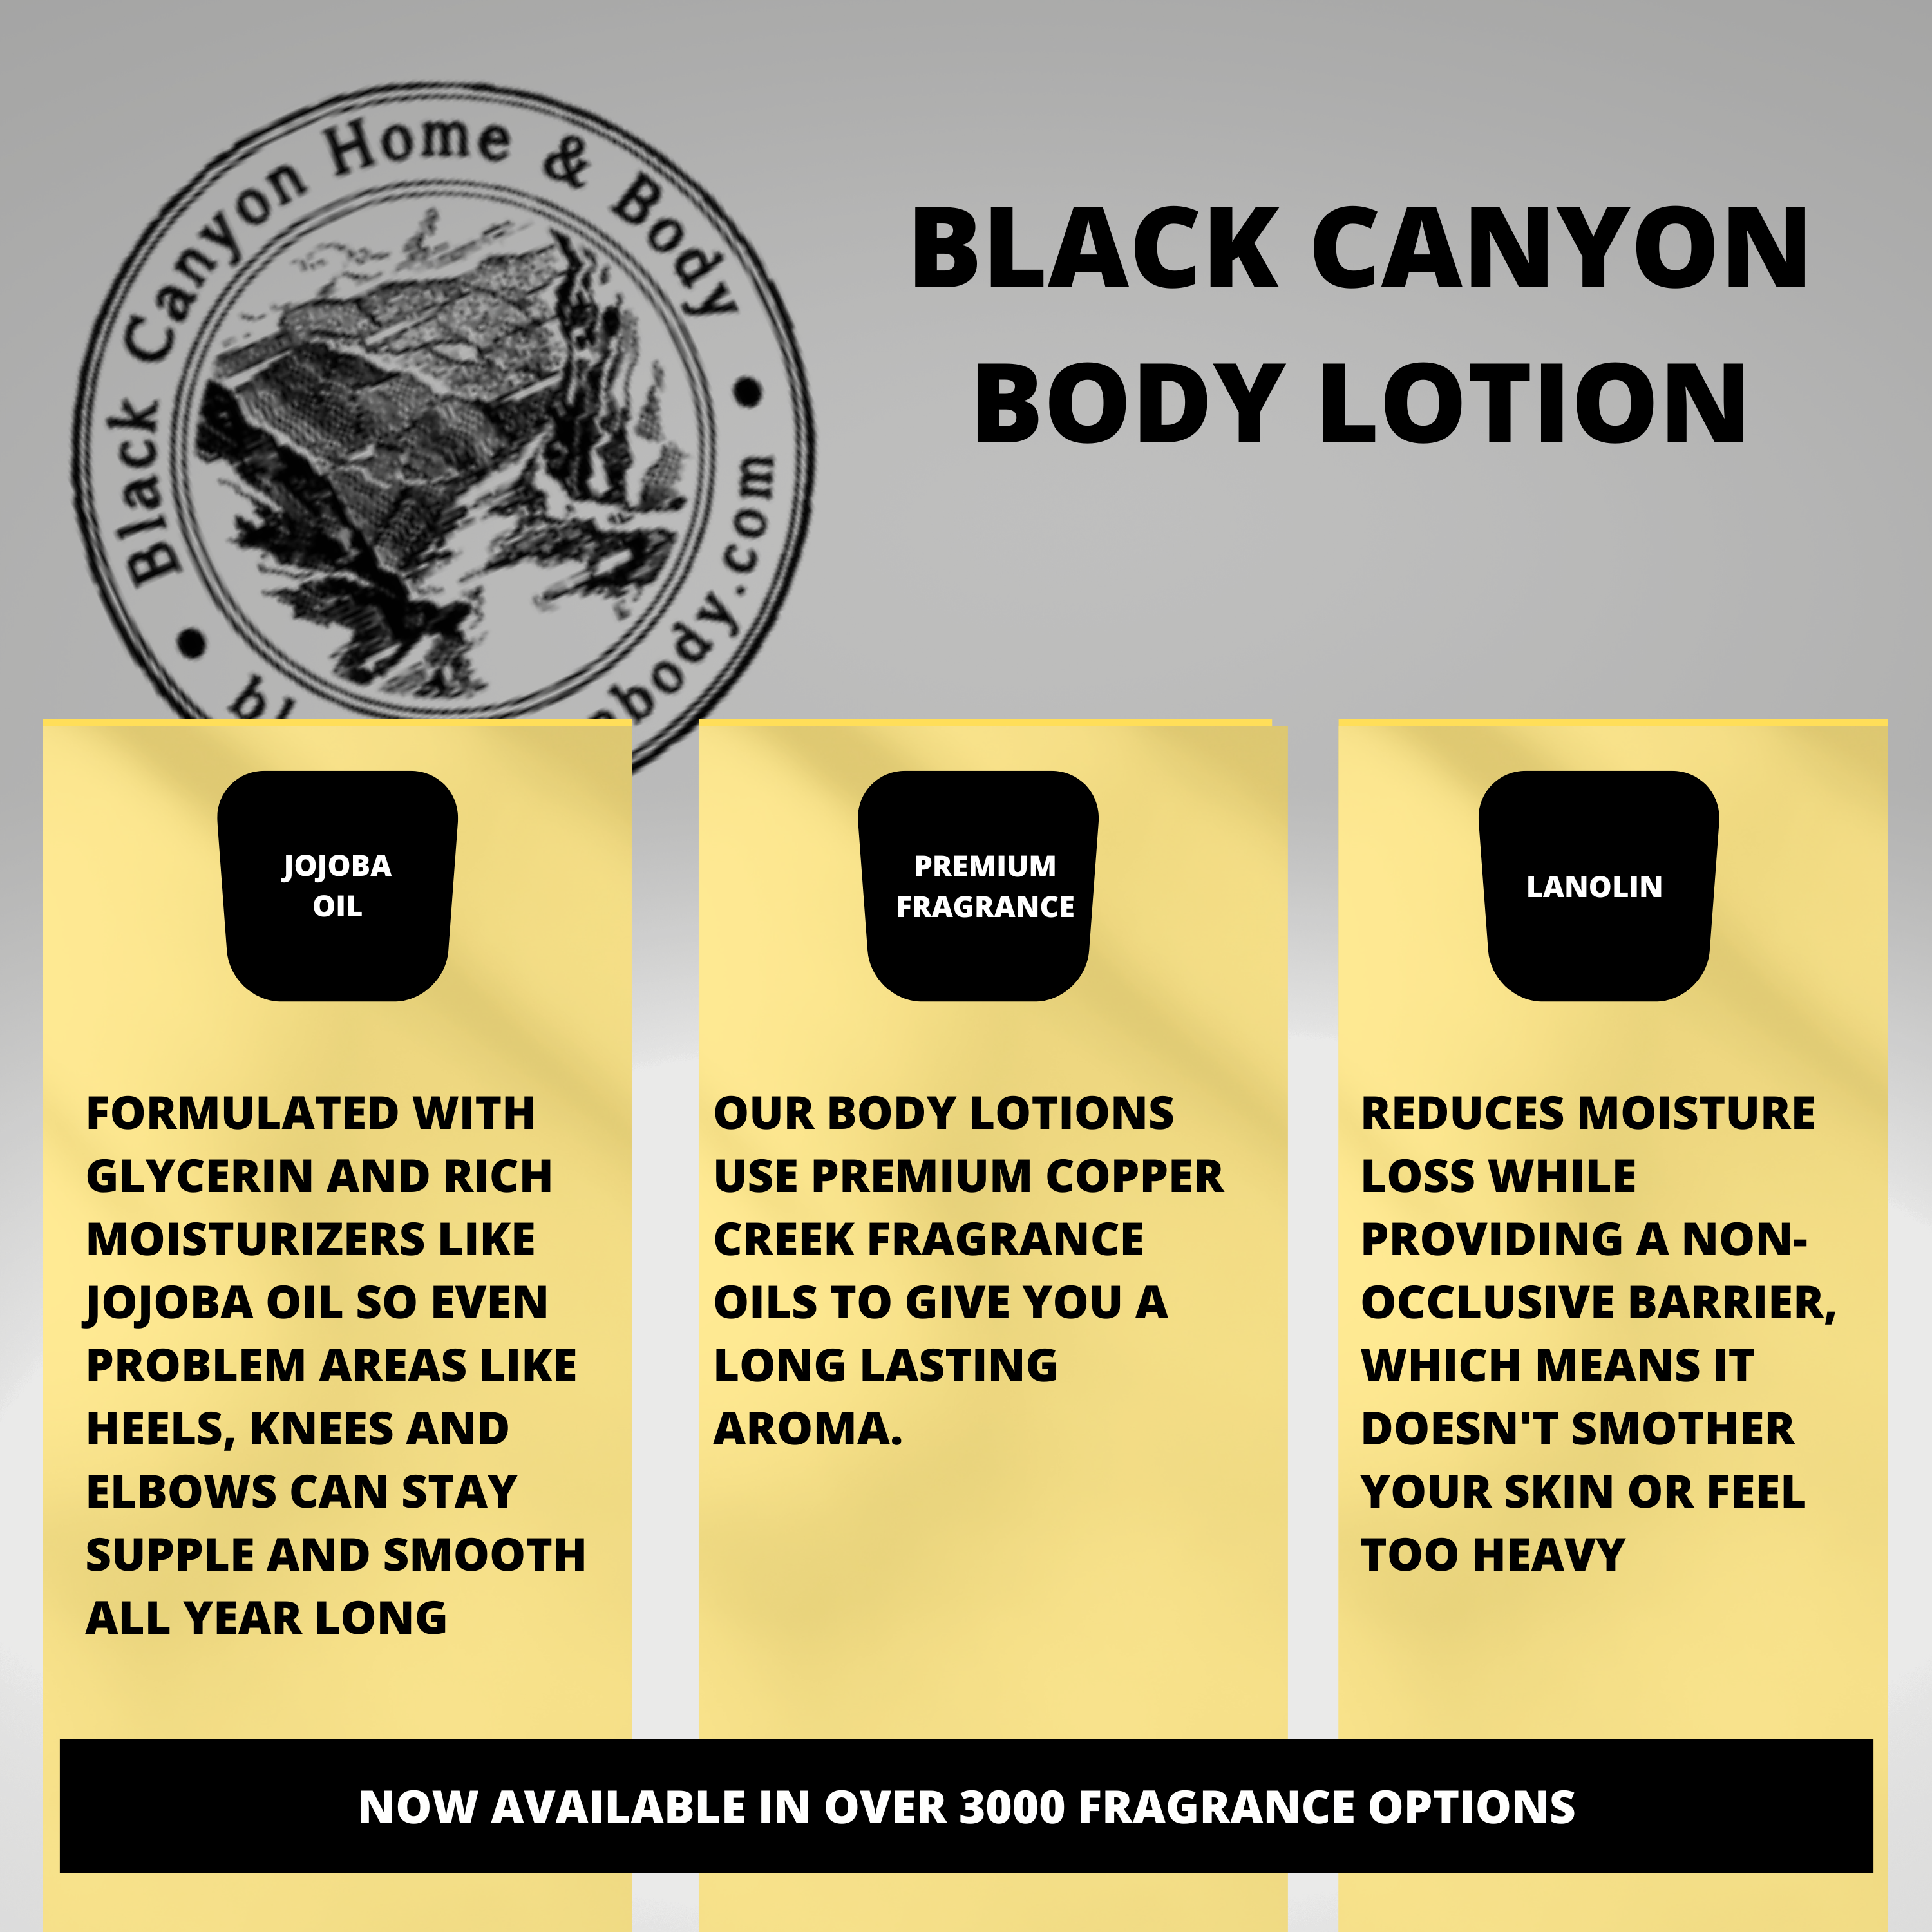 Black Canyon Apothecary Orange Scented Luxury Body Lotion with Lanolin and Jojoba Oil